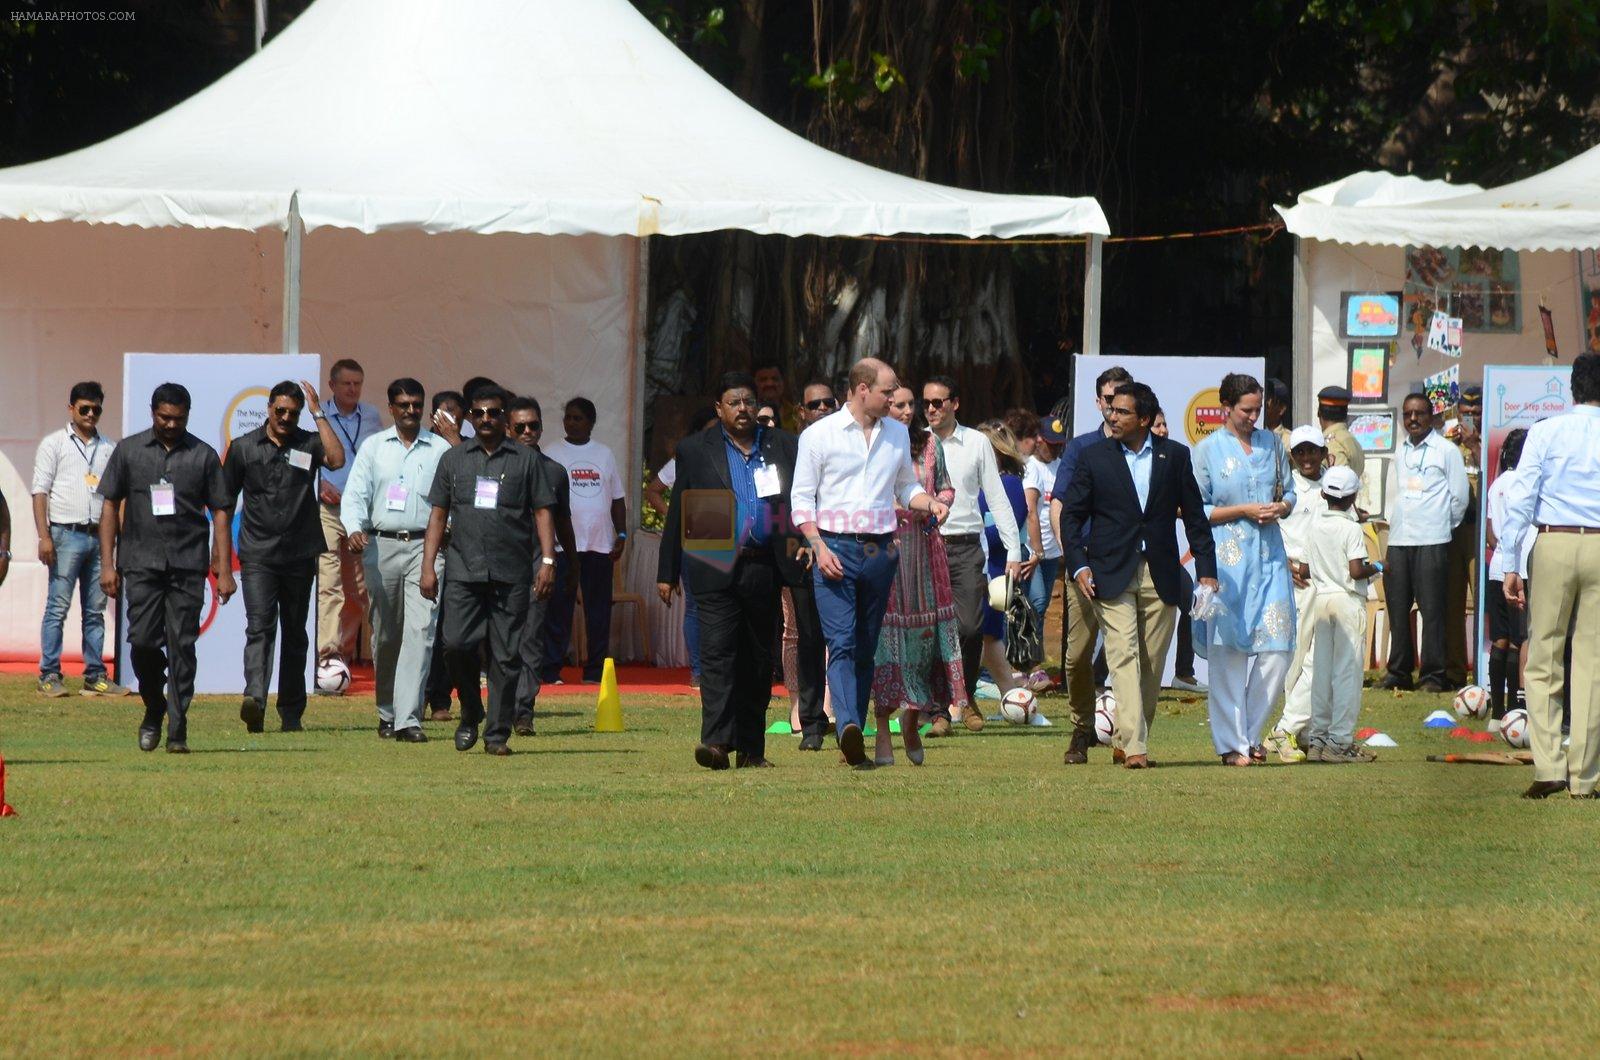 Prince William & Kate Middleton in Mumbai on 10th April 2016